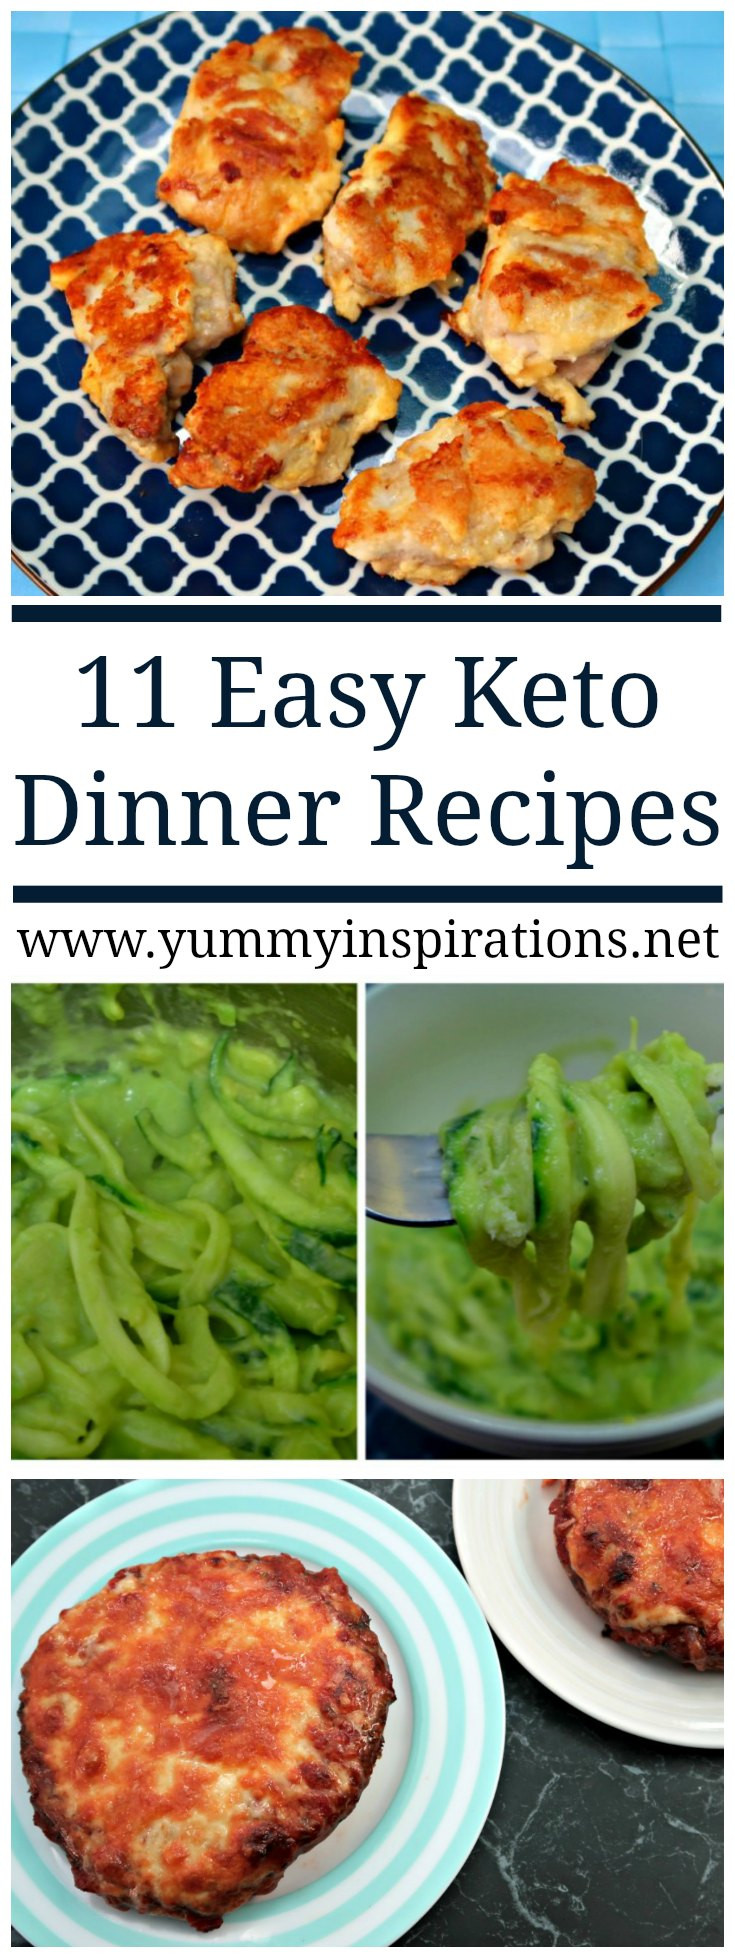 Keto Dinner Ideas Easy
 11 Easy Keto Dinner Recipes Quick Low Carb Ketogenic